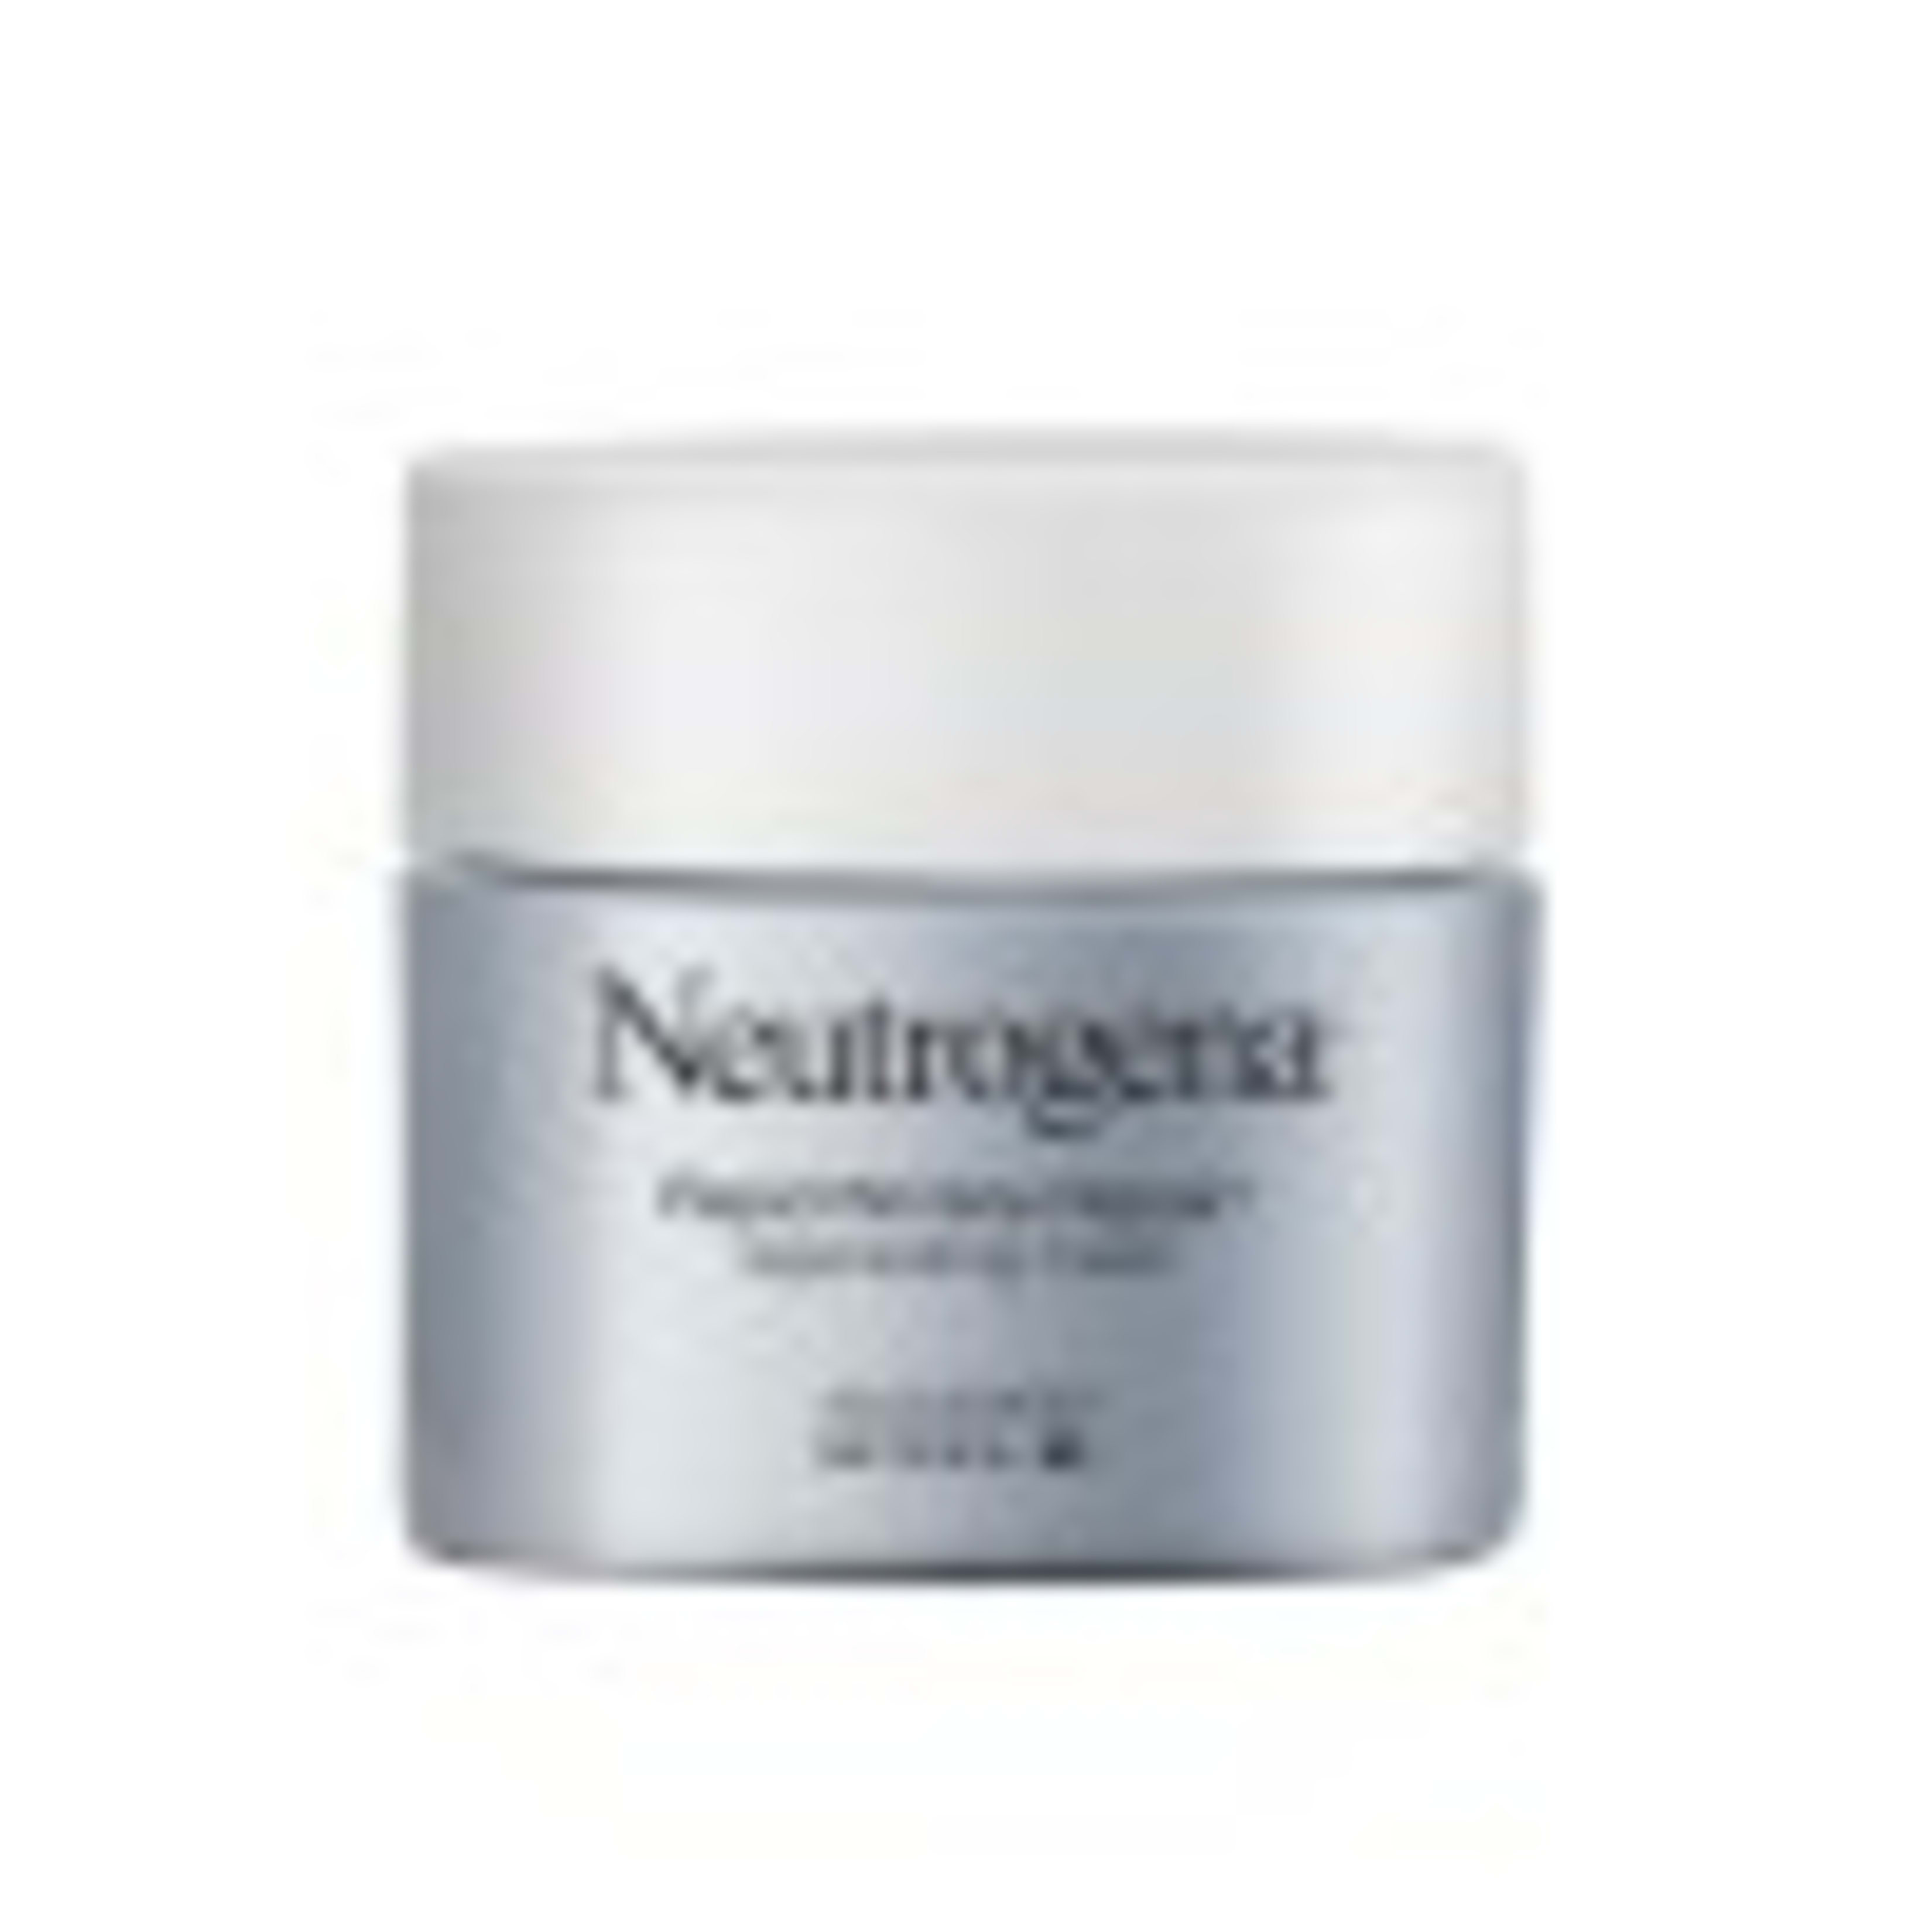 Neutrogena Rapid Wrinkle Repair Regenerating Cream (1.7 oz) - image 2 of 2